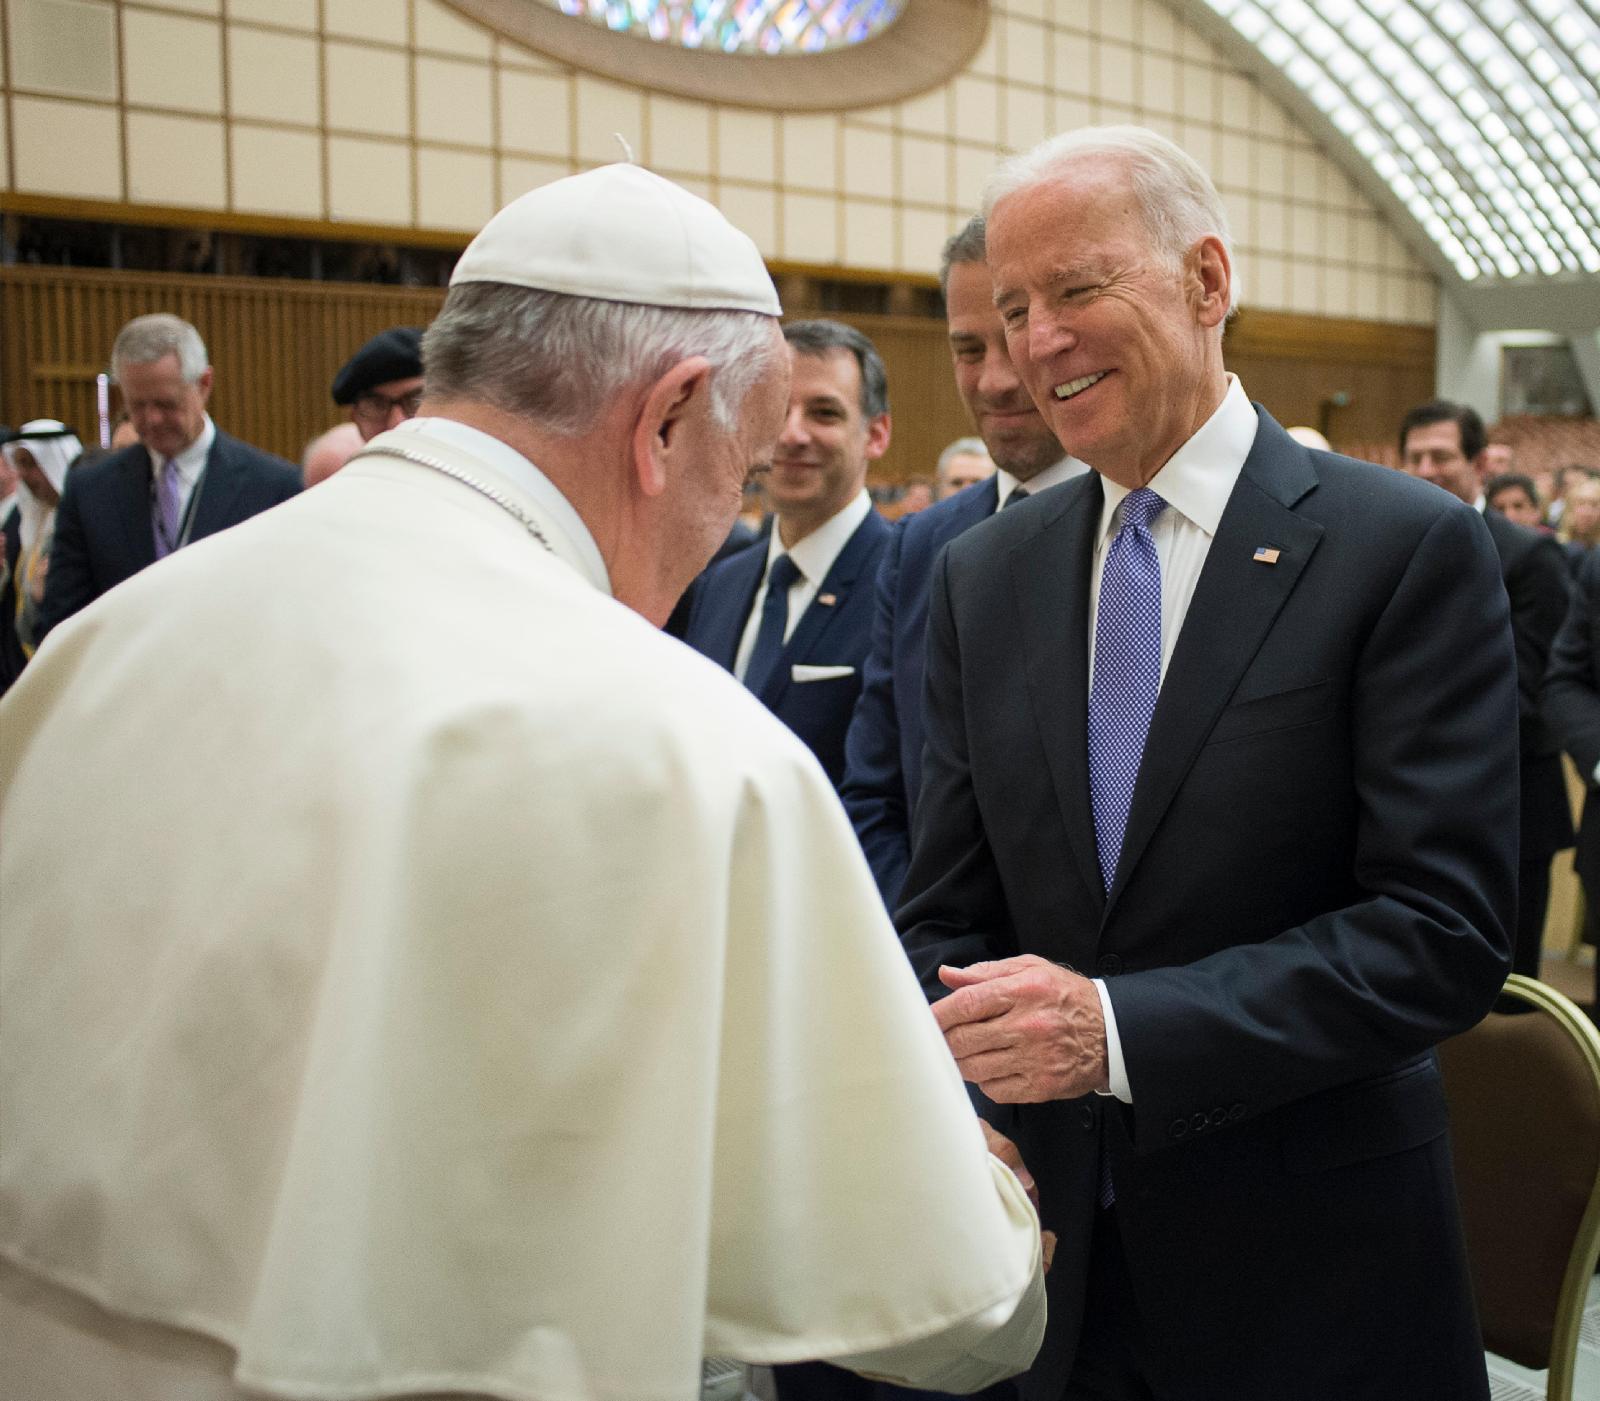 Pope Francis congratulates Biden in phone call